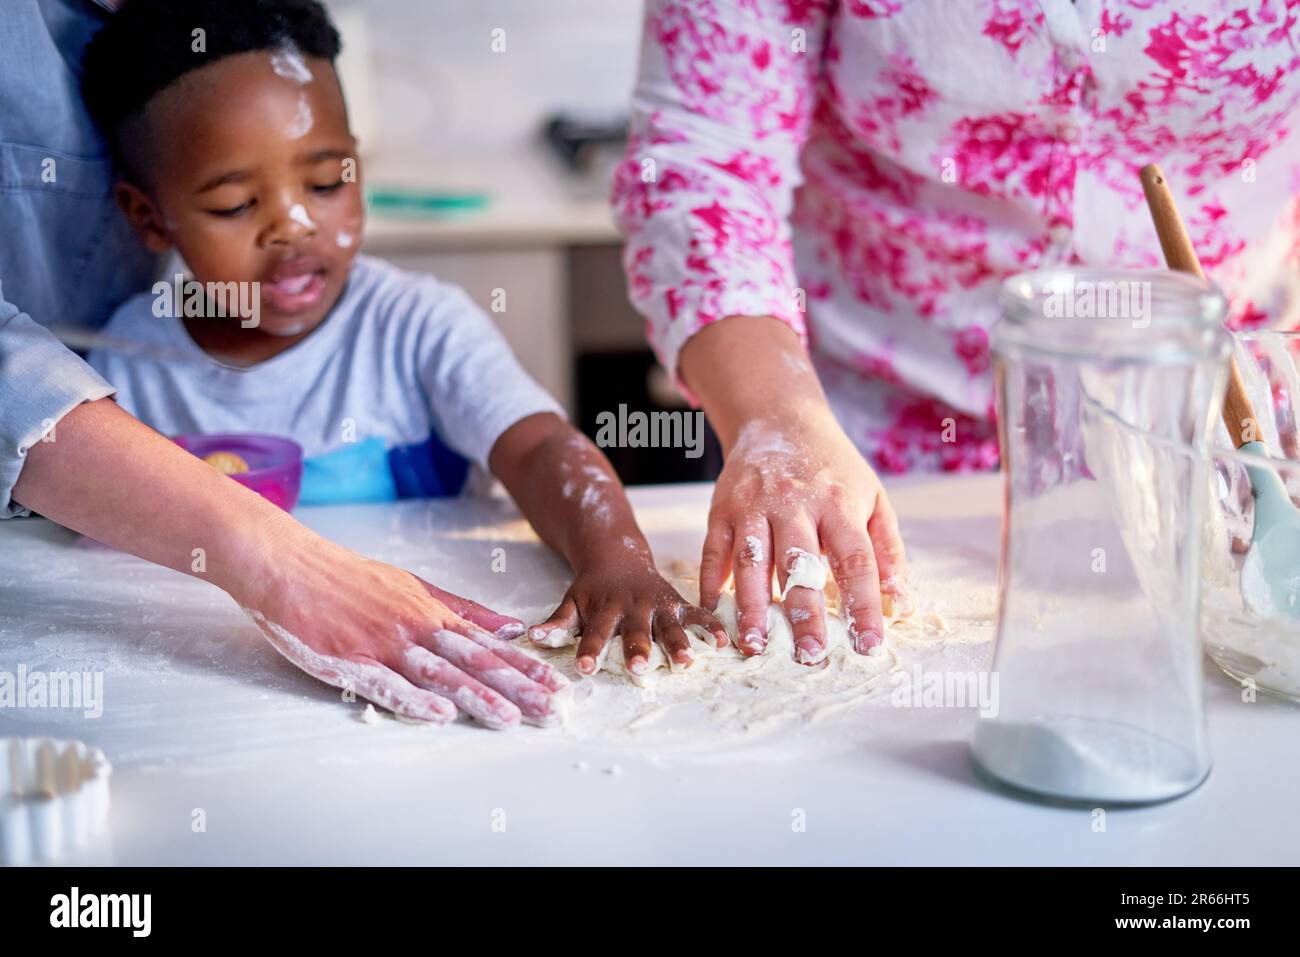 Lesbian couple and son baking, spreading flour on kitchen counter Stock Photo